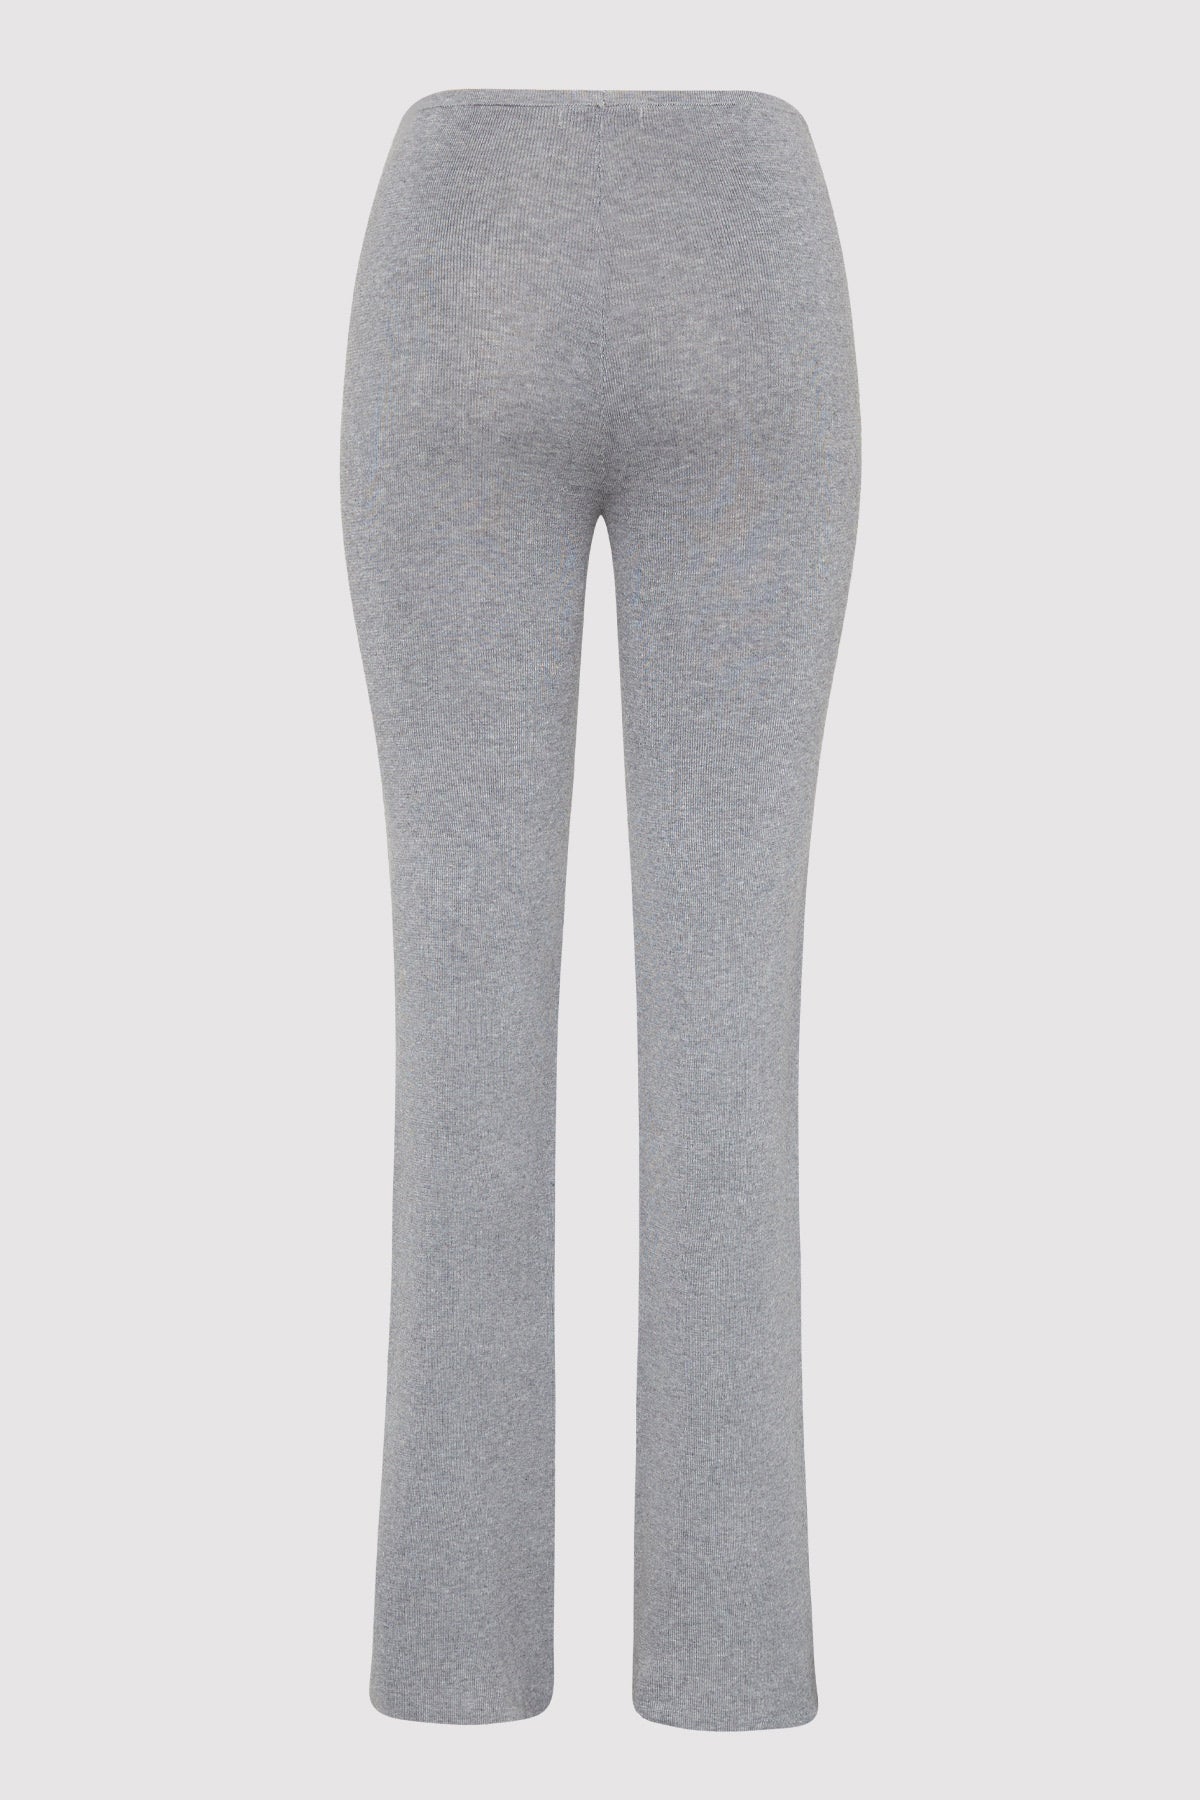 Low Waist Knit Pants - Grey Marle